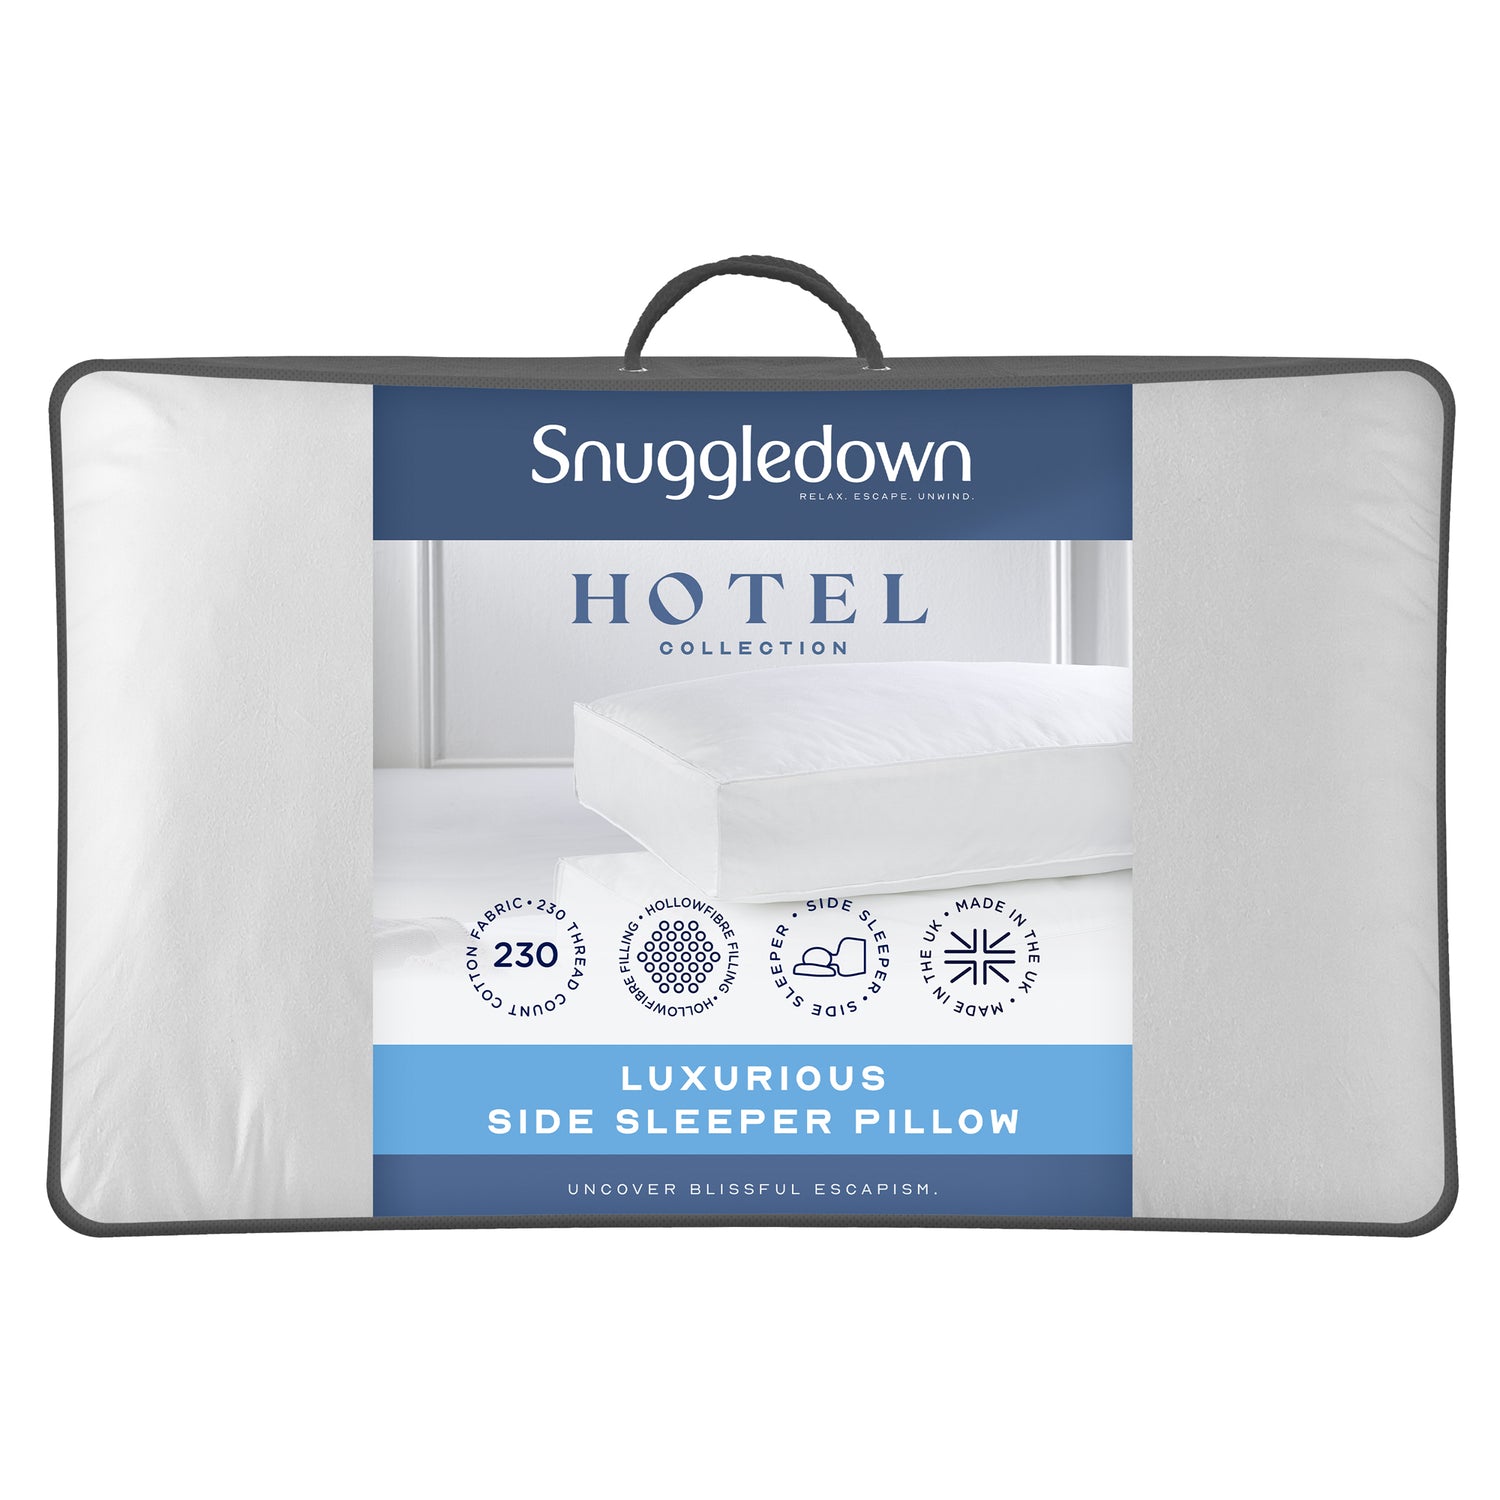 Snuggledown Side Sleeper Pillow 1 Shaws Department Stores